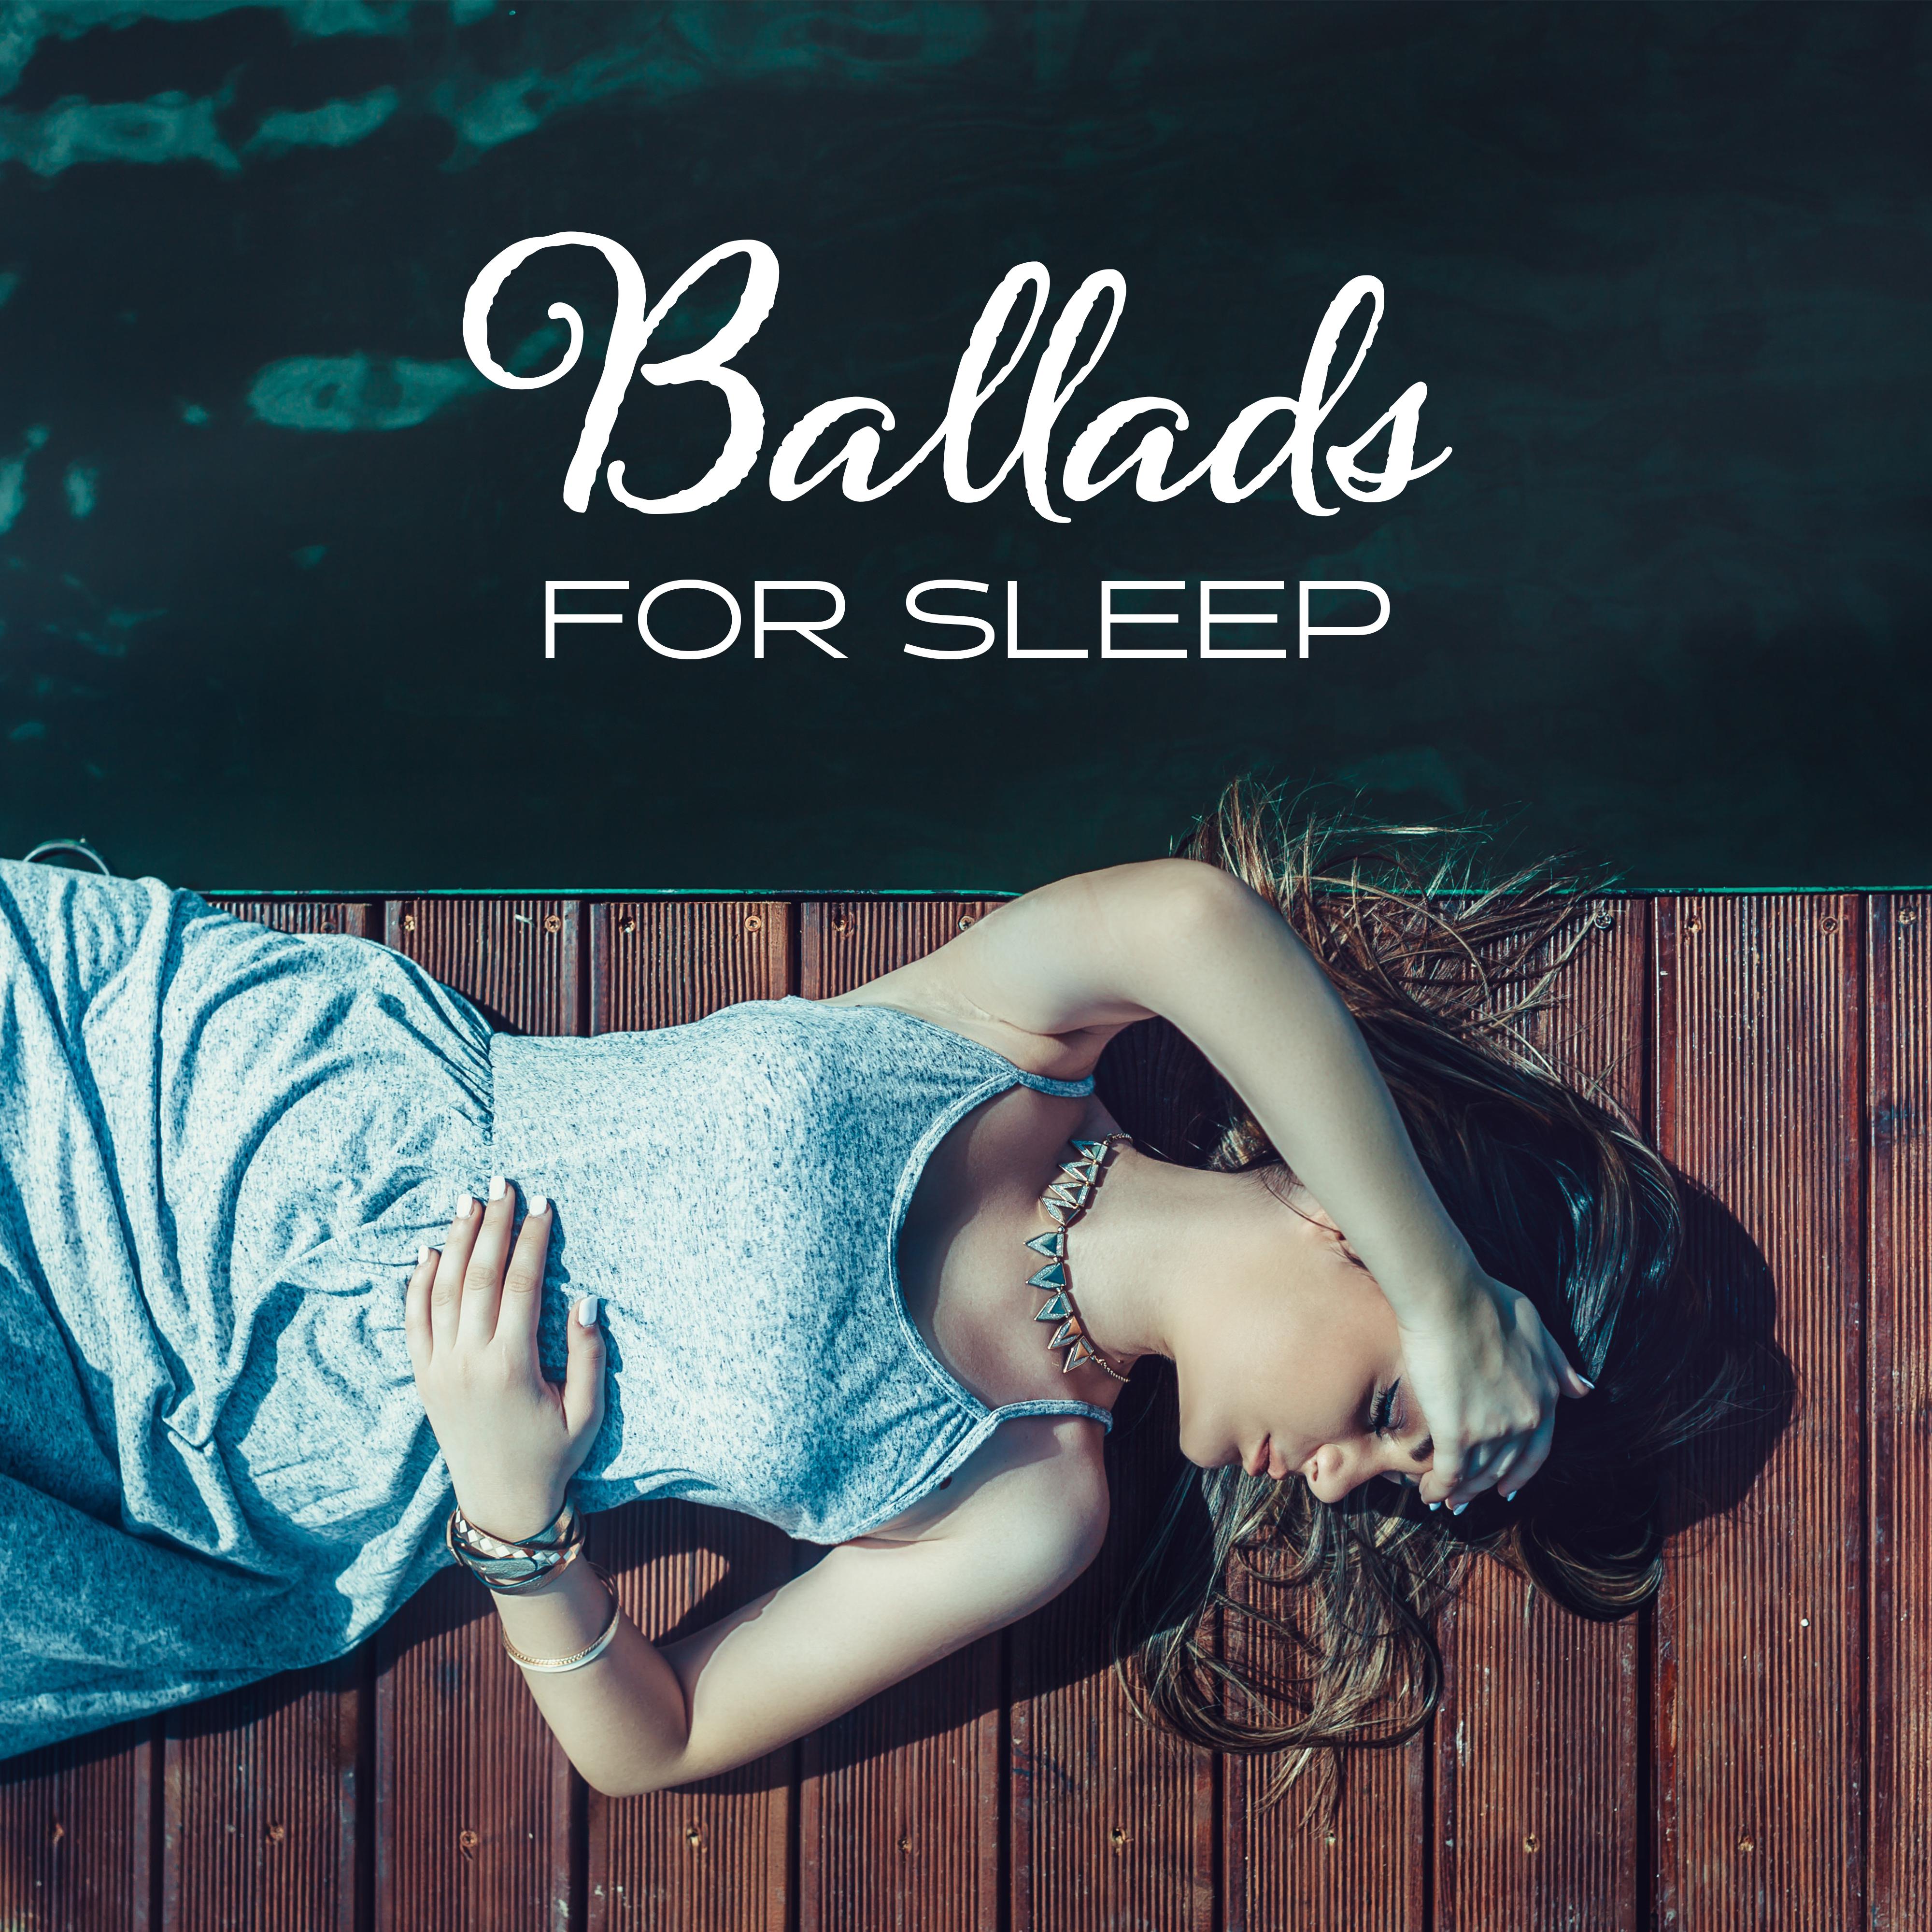 Ballads for Sleep